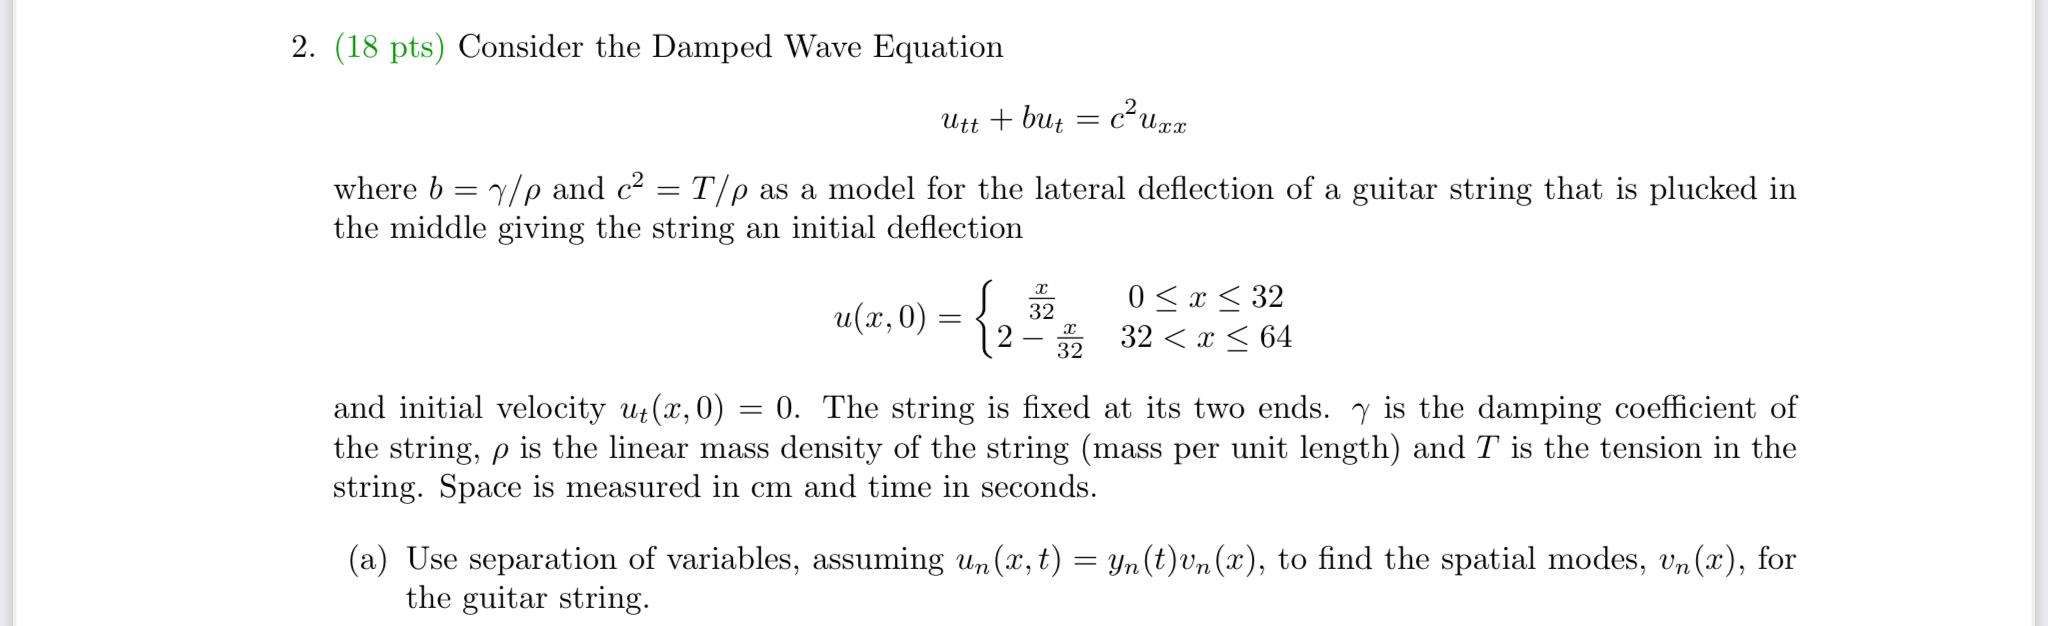 2 18 Pts Consider The Damped Wave Equation Uttt Chegg Com